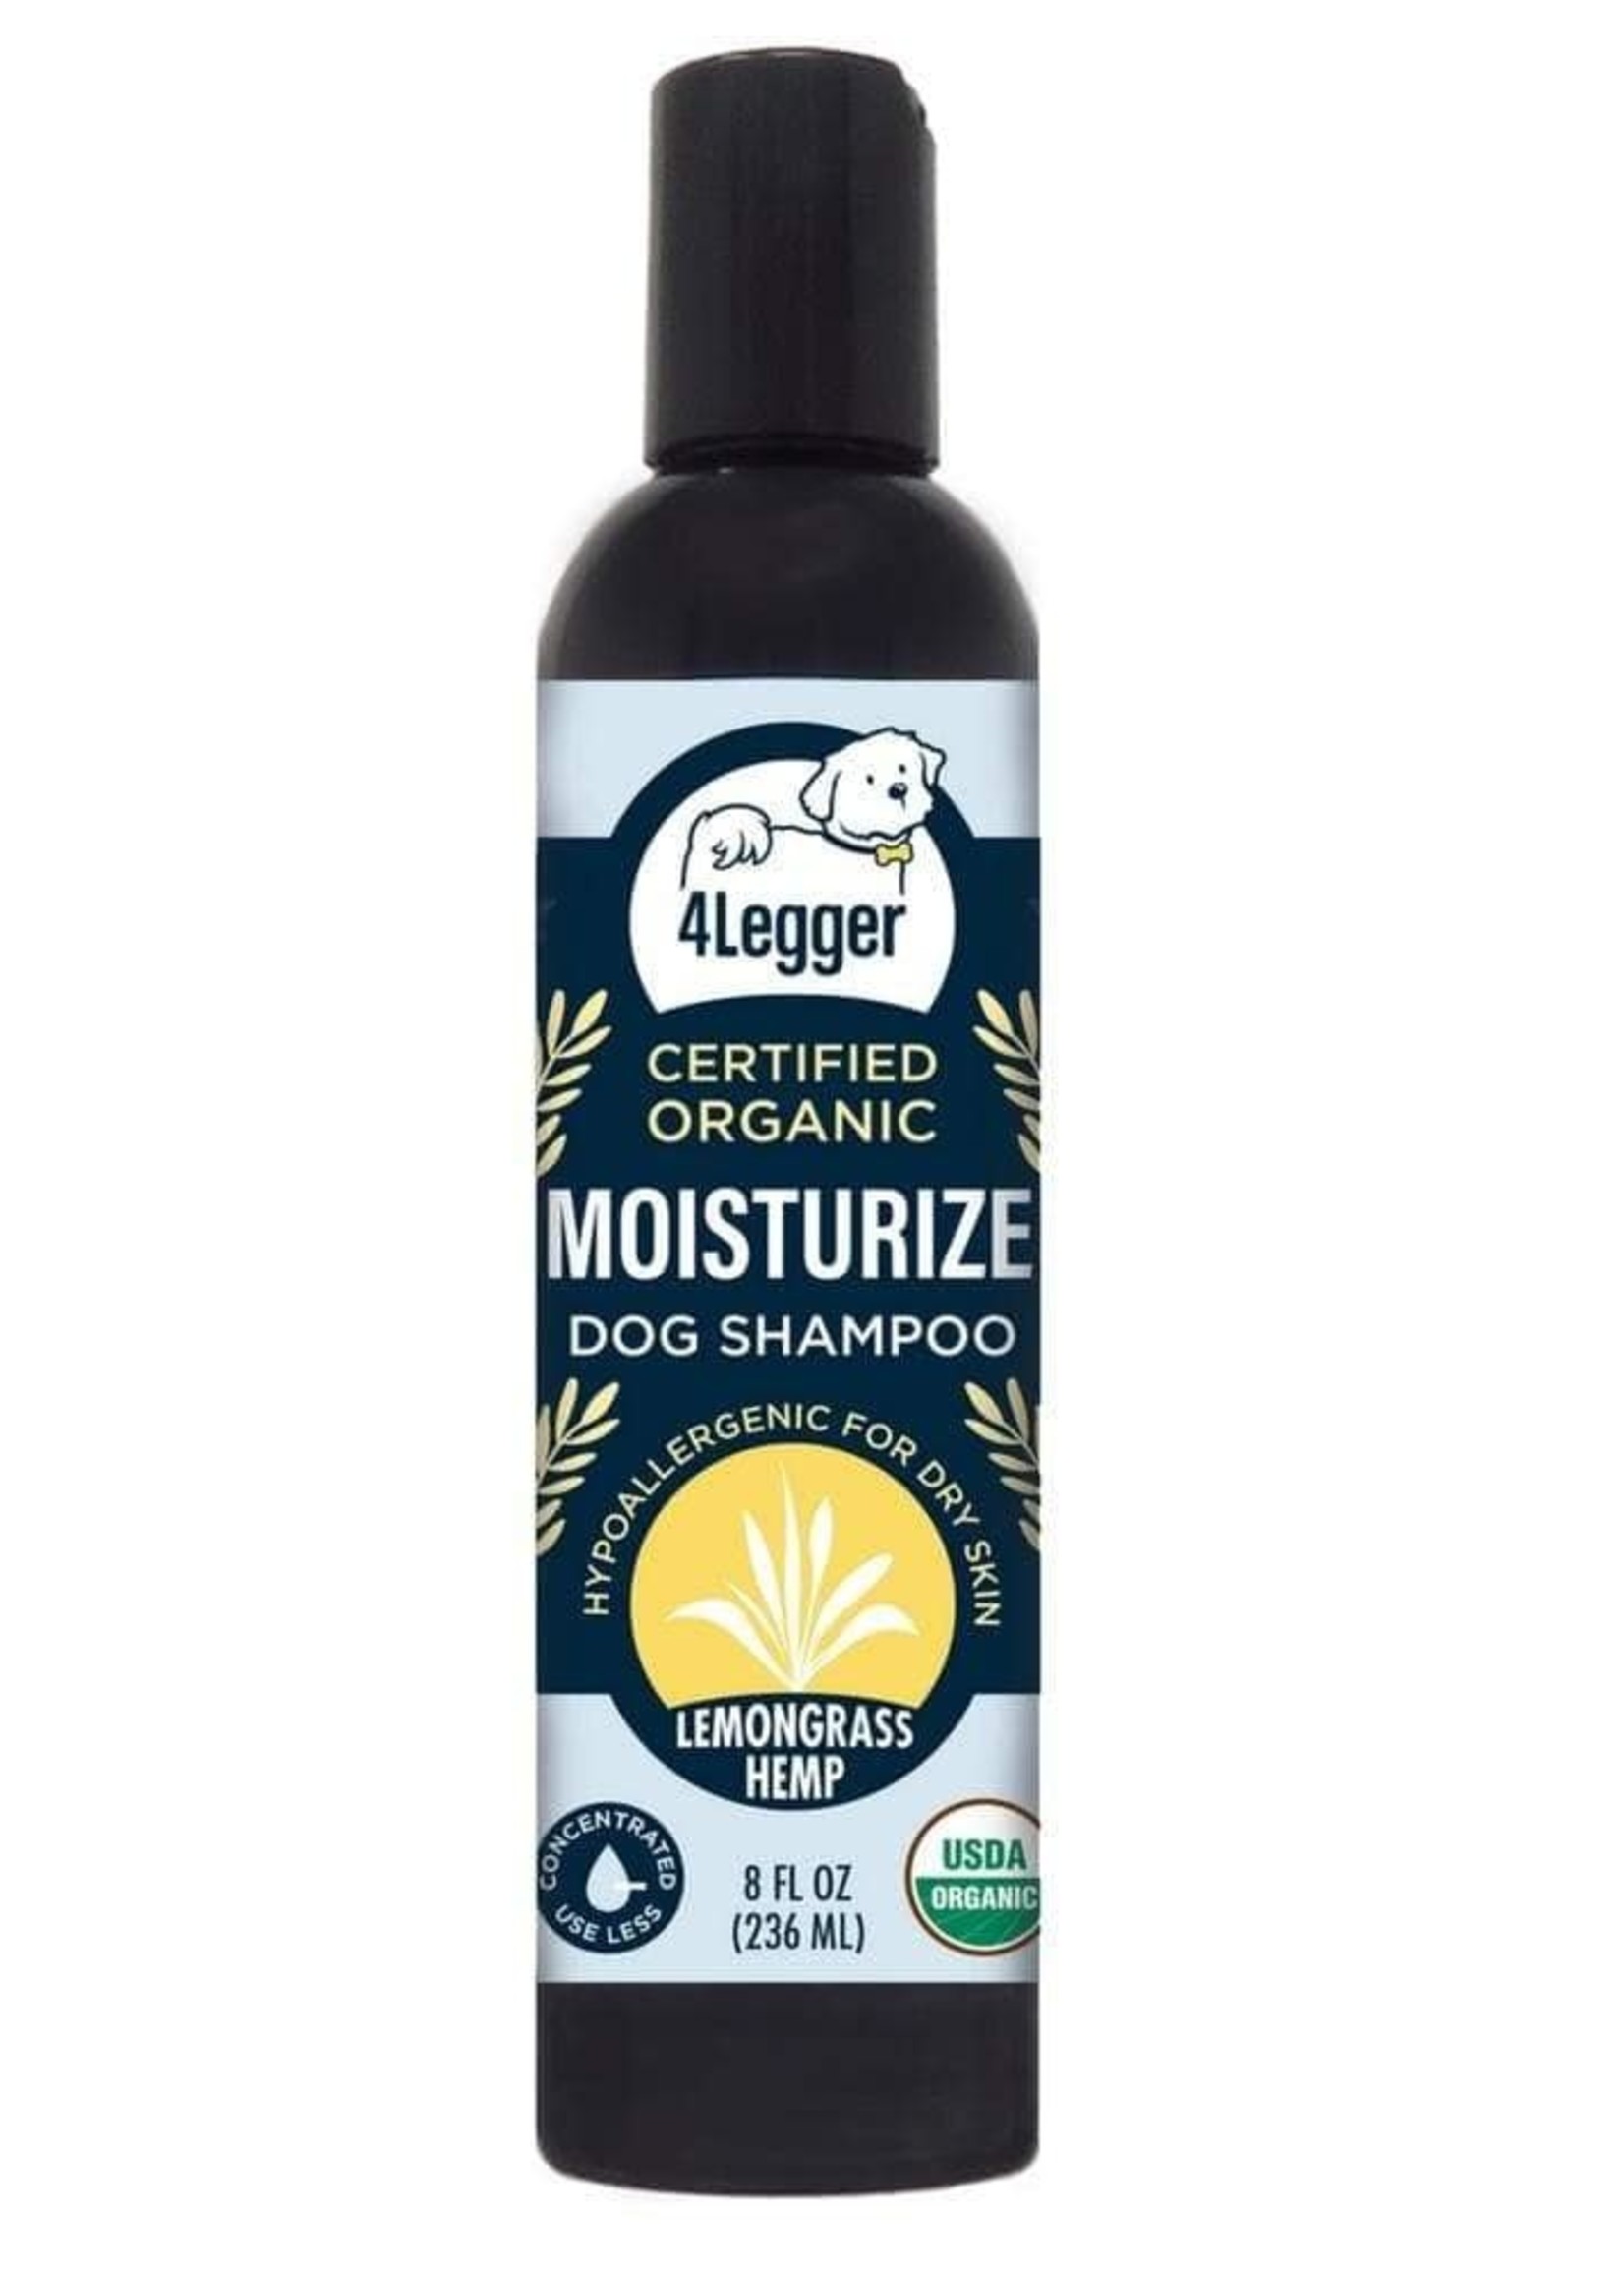 4 Legger 4 Legger Organic Dog Shampoo - Moisturize Lemongrass Hemp 8 fl oz